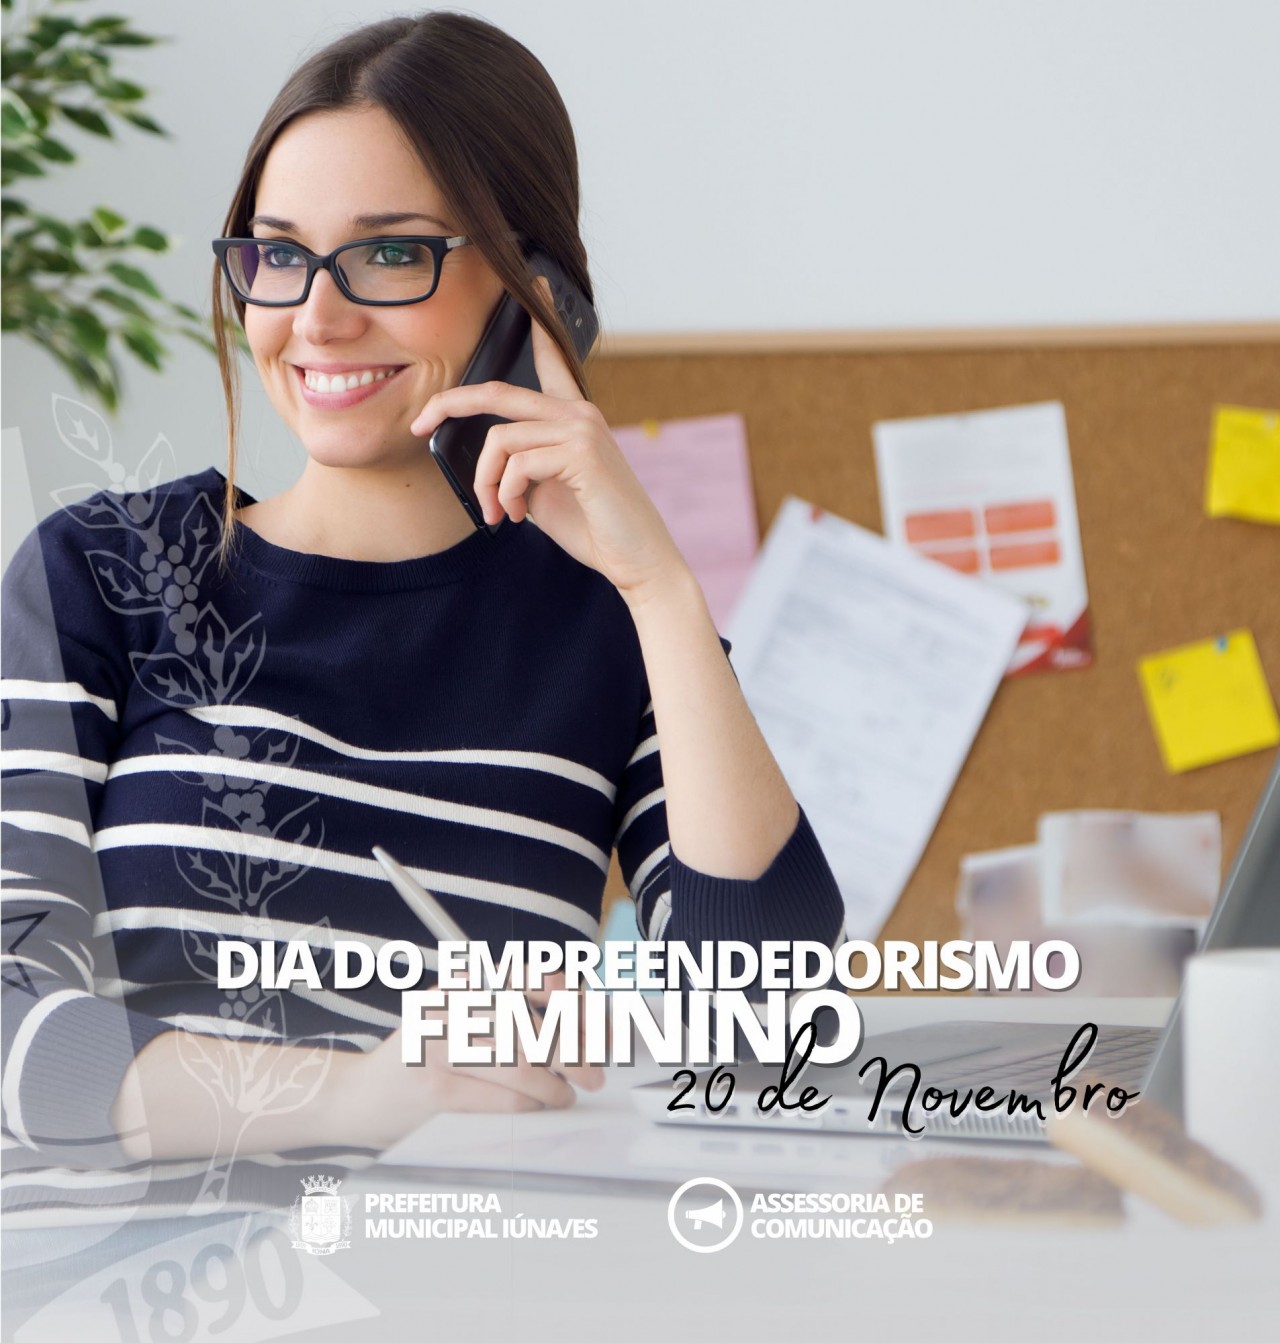 Dia do Empreendedorismo Feminino